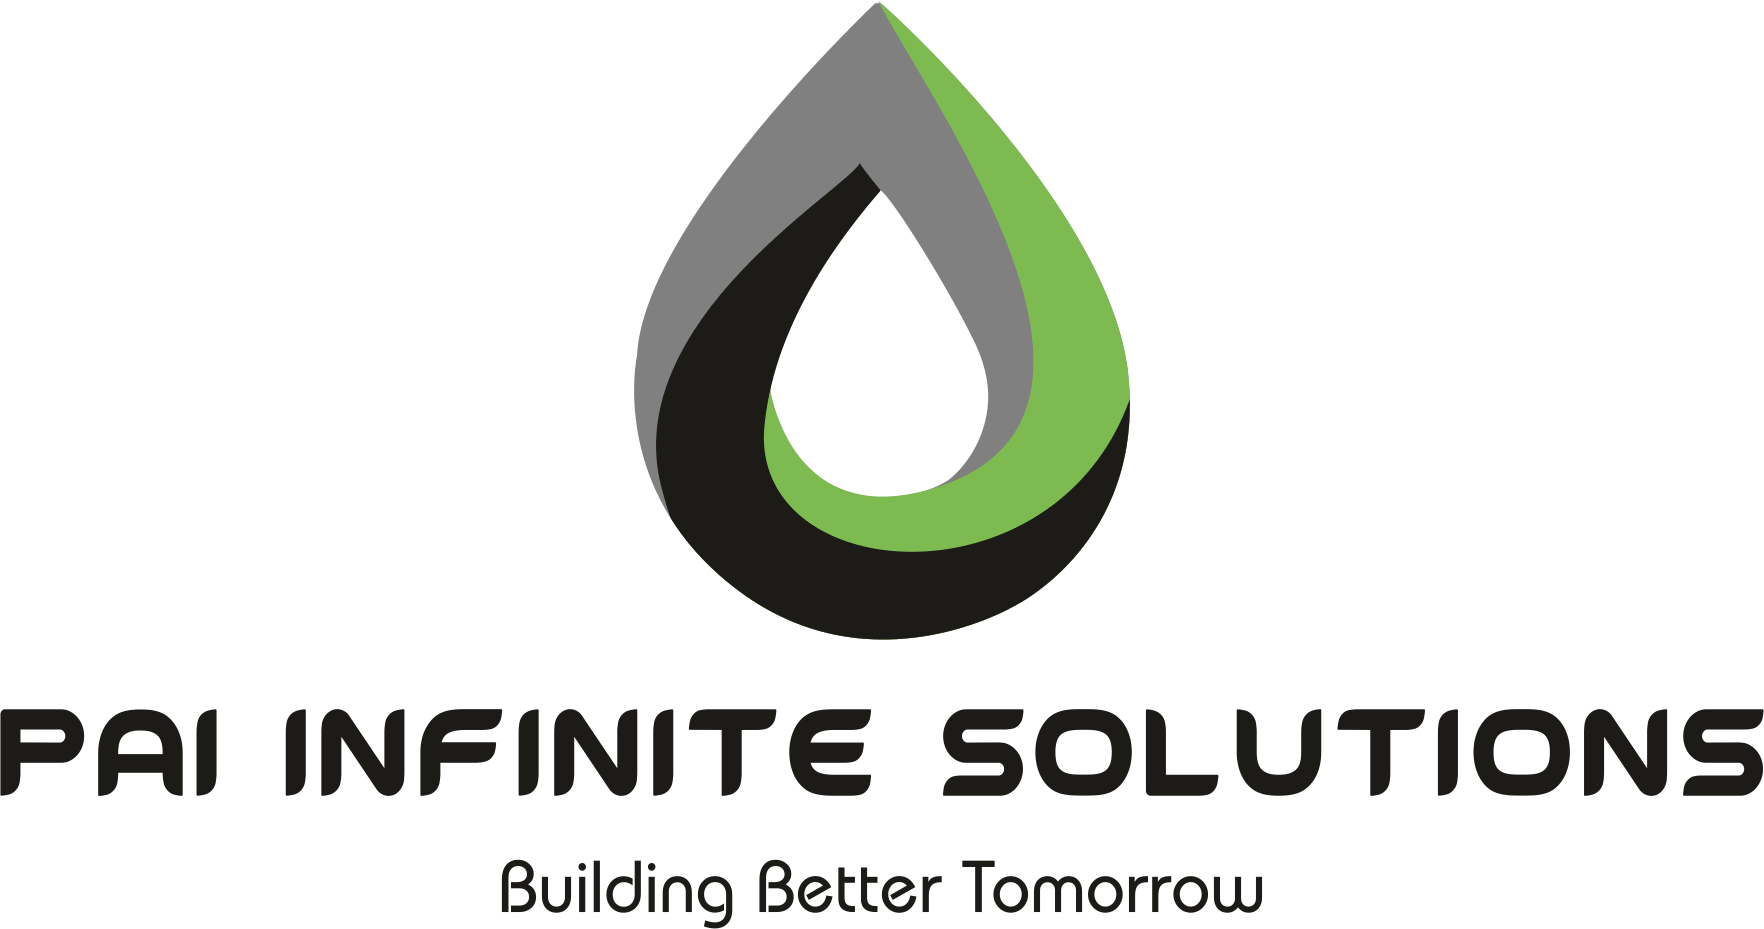 Pai Infinite Solutions logo